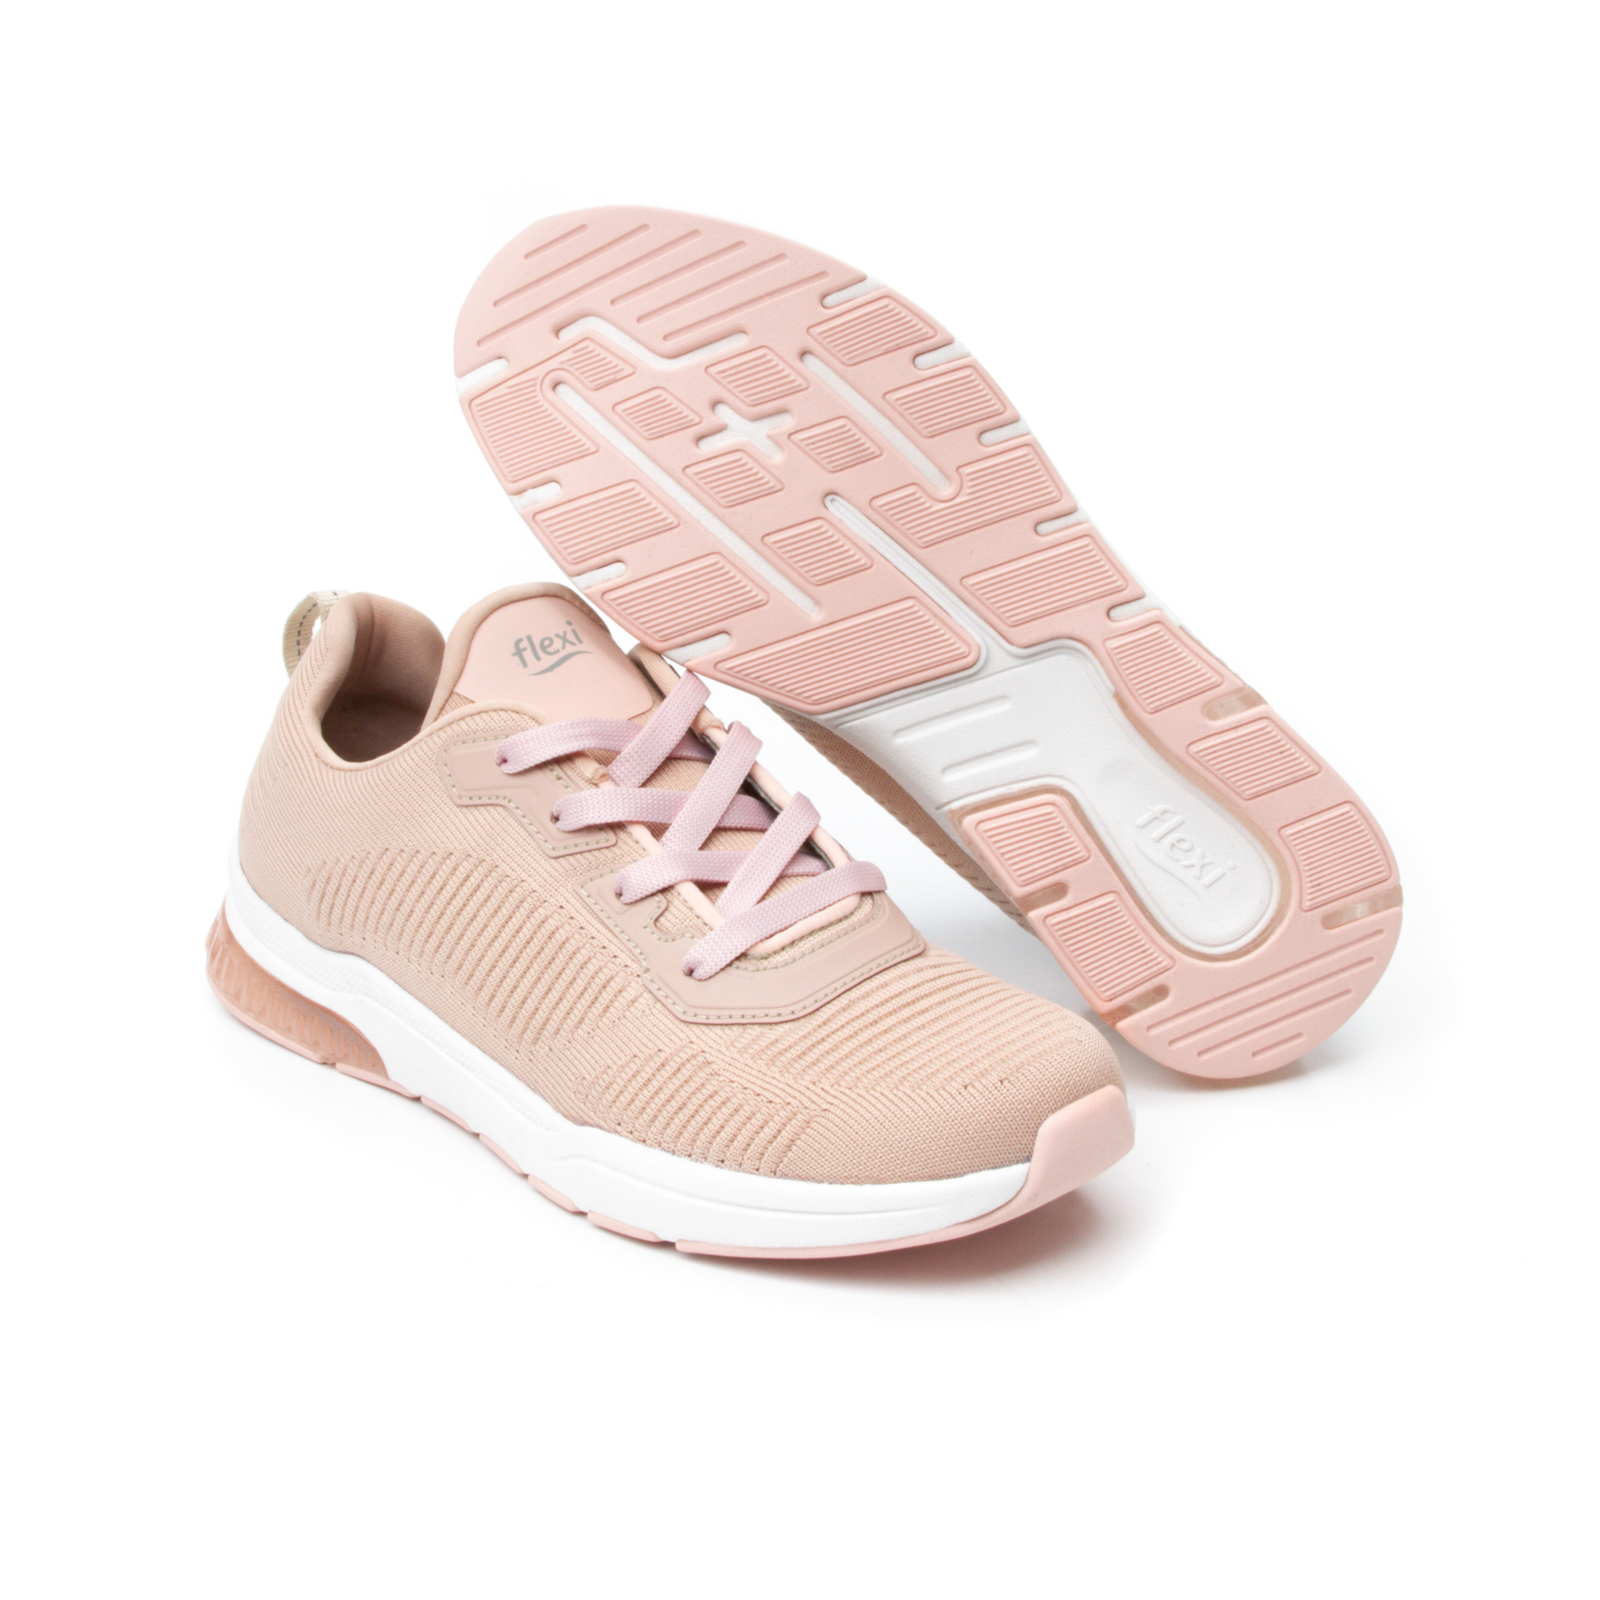 Sneaker Tejido Flexi para Mujer con Sistema Recovery Form Estilo Rosa | Flexi Site USA